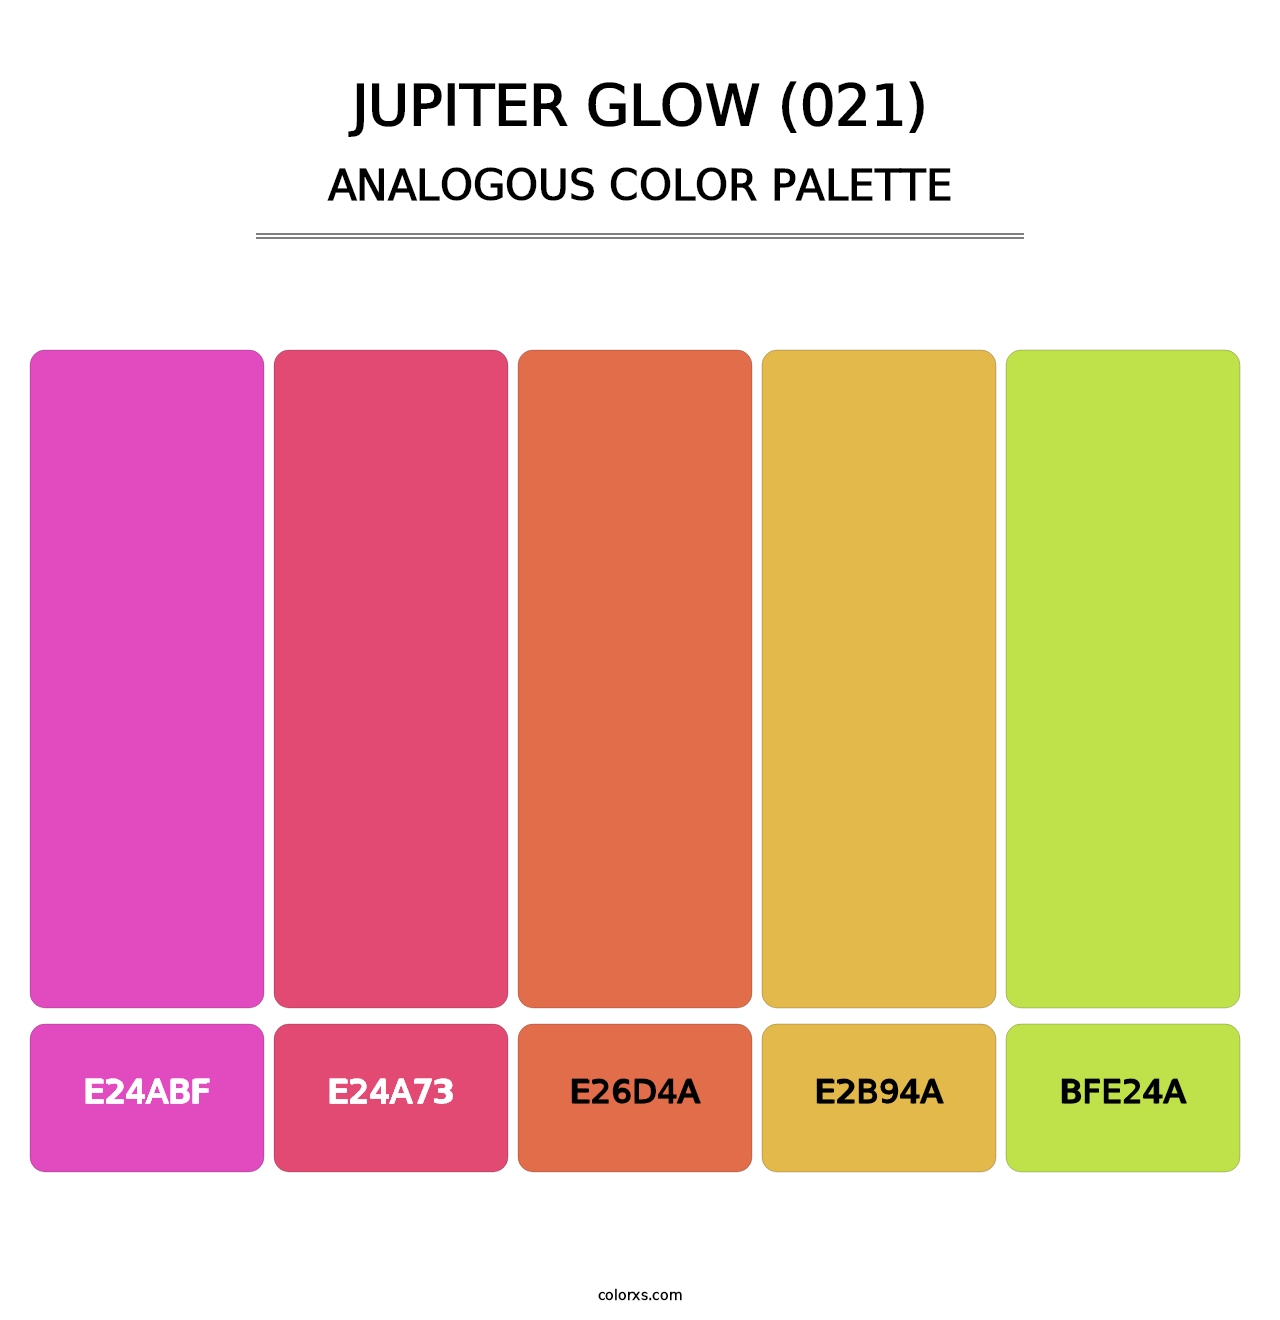 Jupiter Glow (021) - Analogous Color Palette